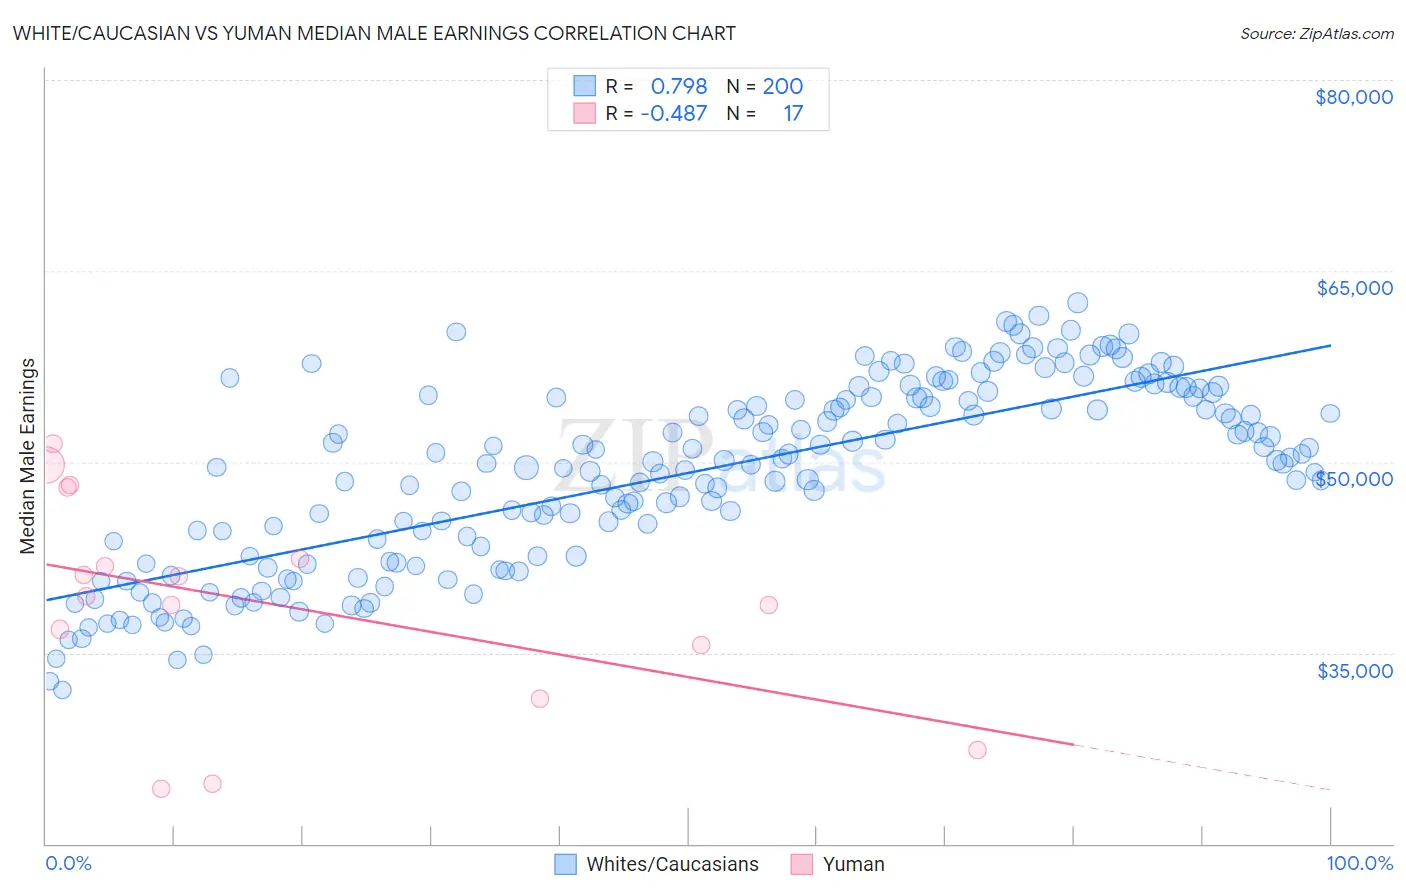 White/Caucasian vs Yuman Median Male Earnings